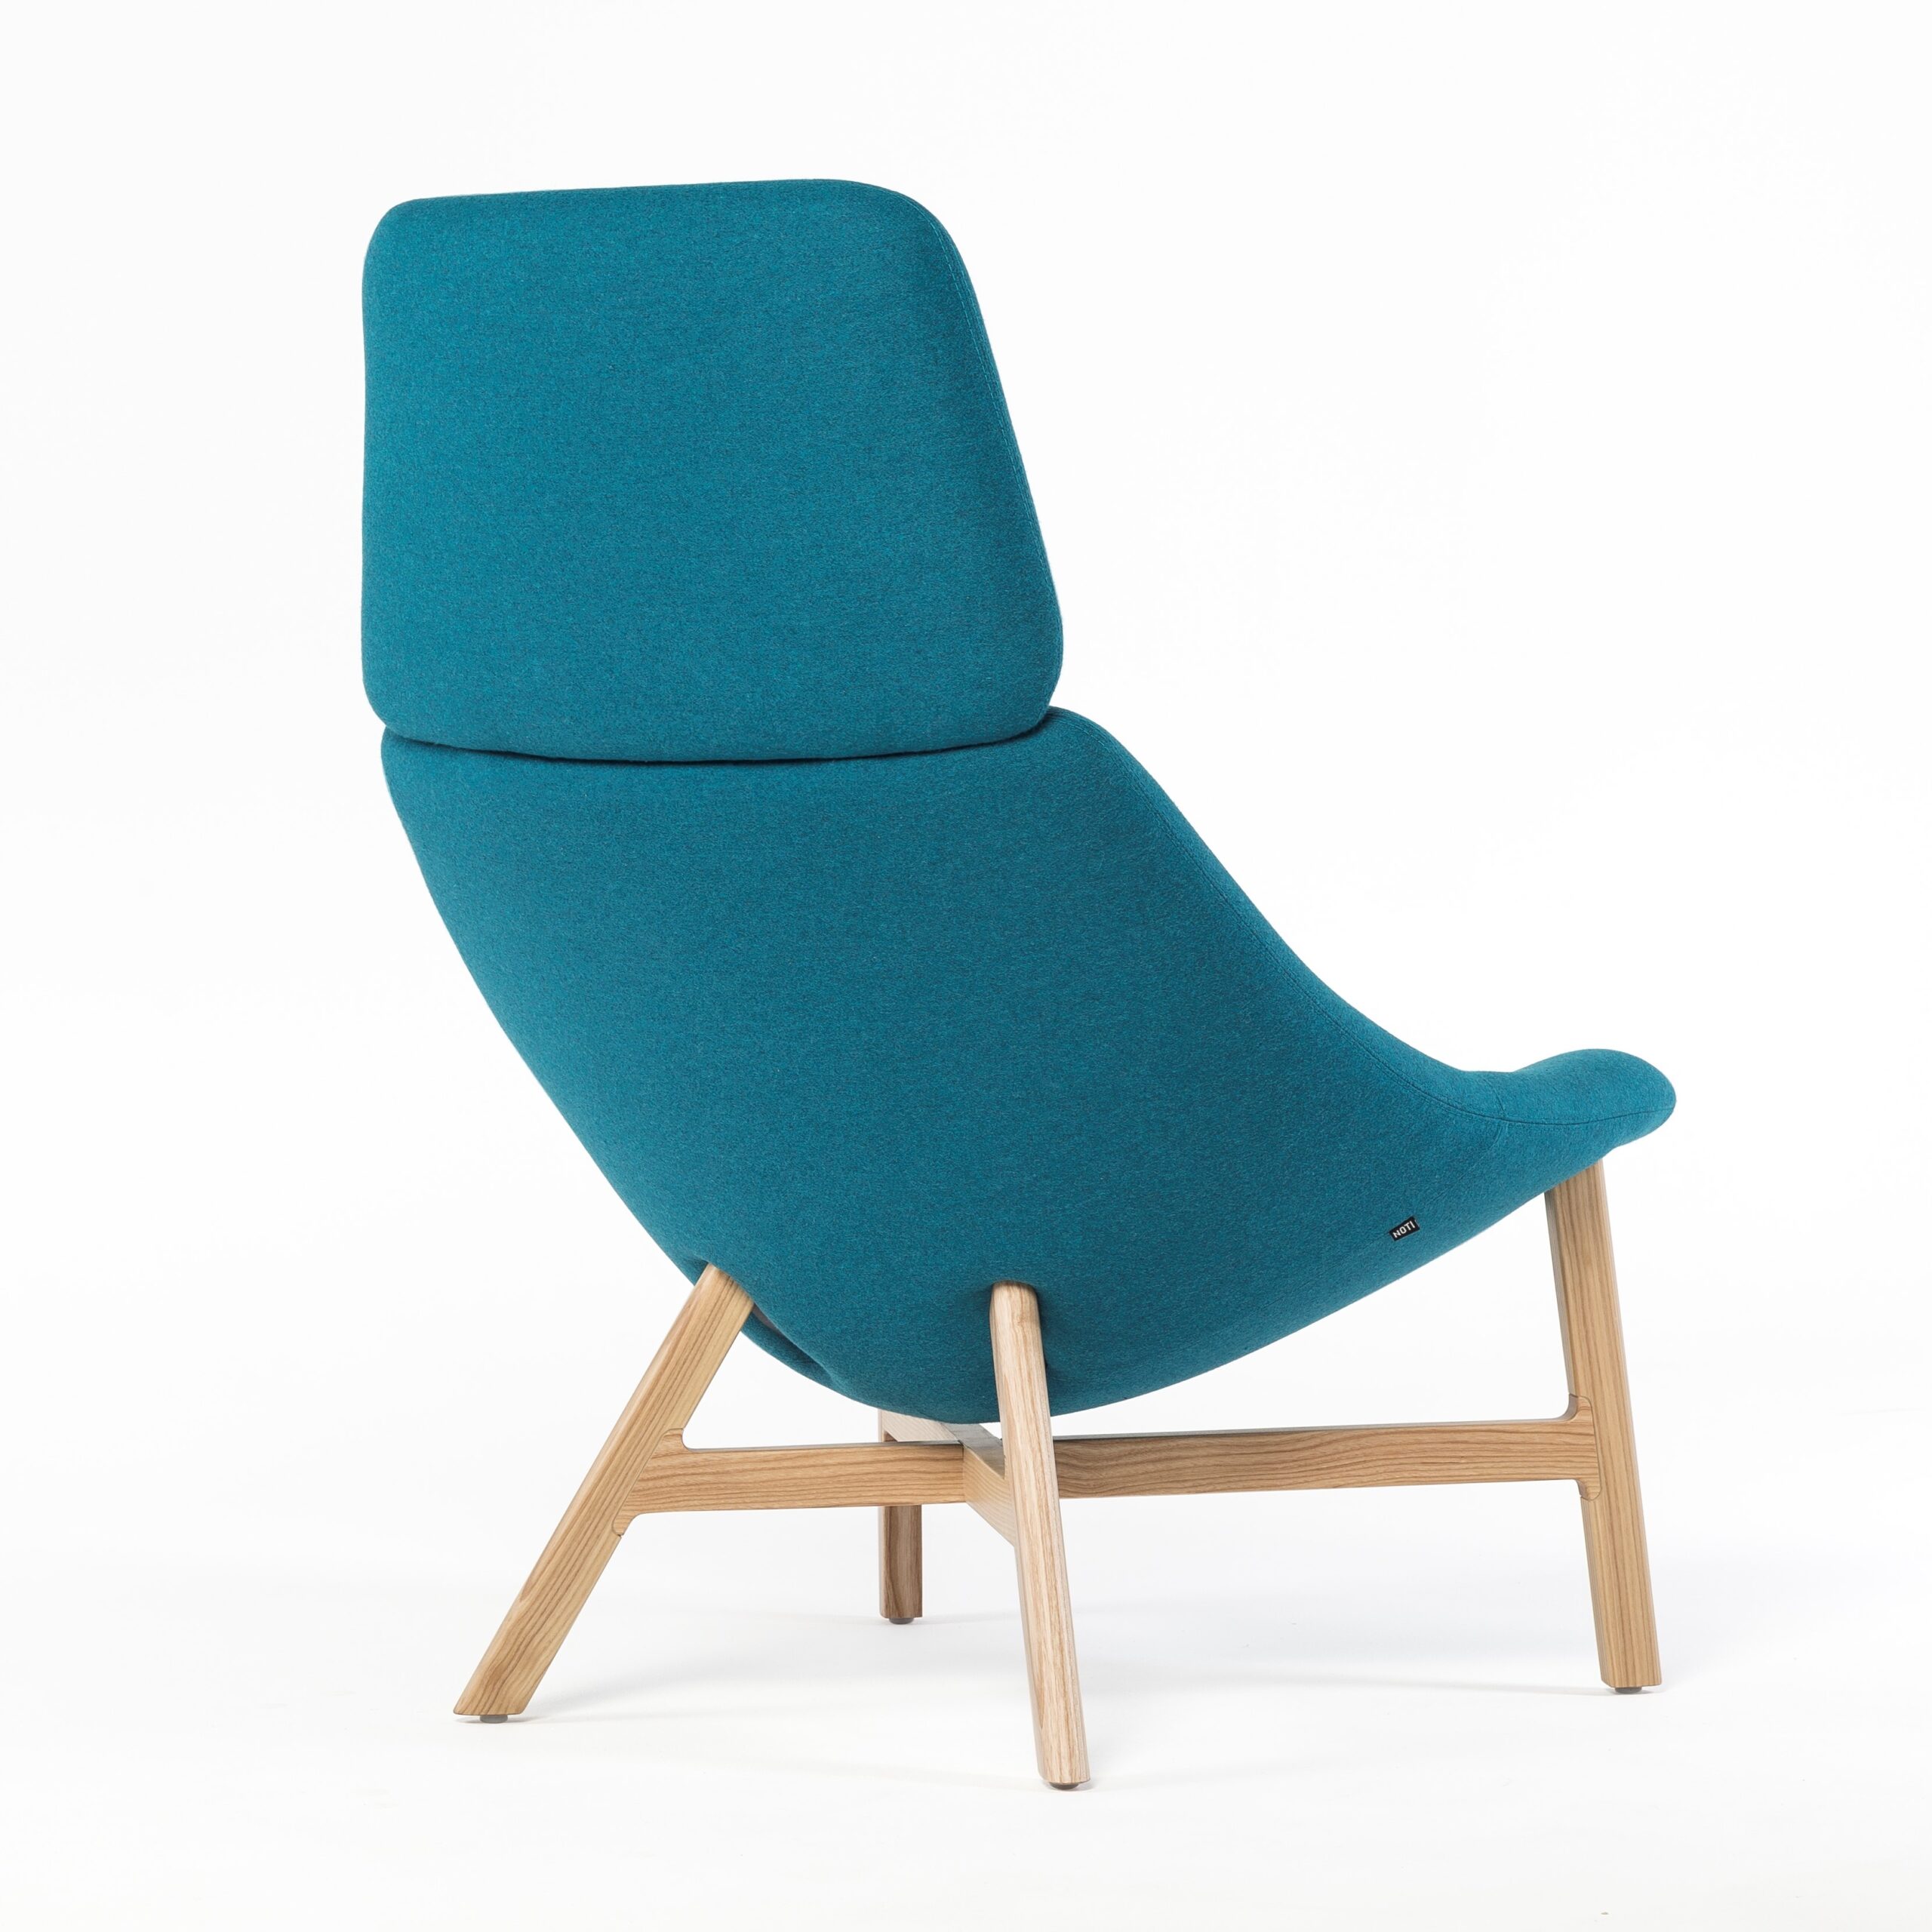 Mishell_XL_armchair_wooden_legs